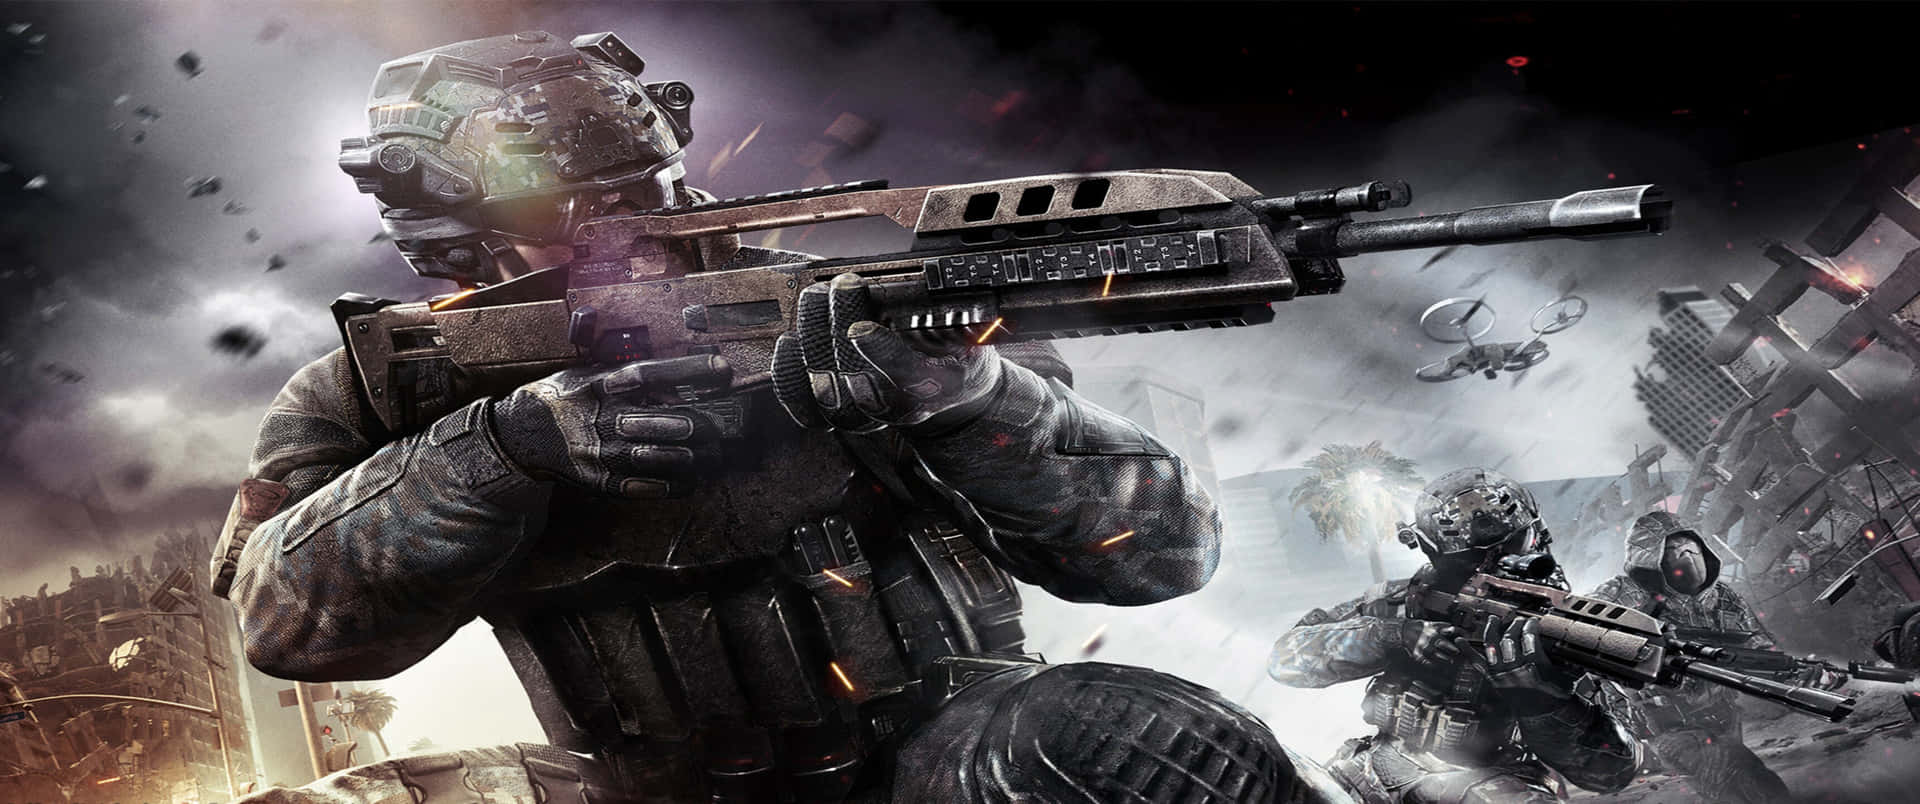 Närbildav Soldat 3440x1440p Call Of Duty Modern Warfare Bakgrund.